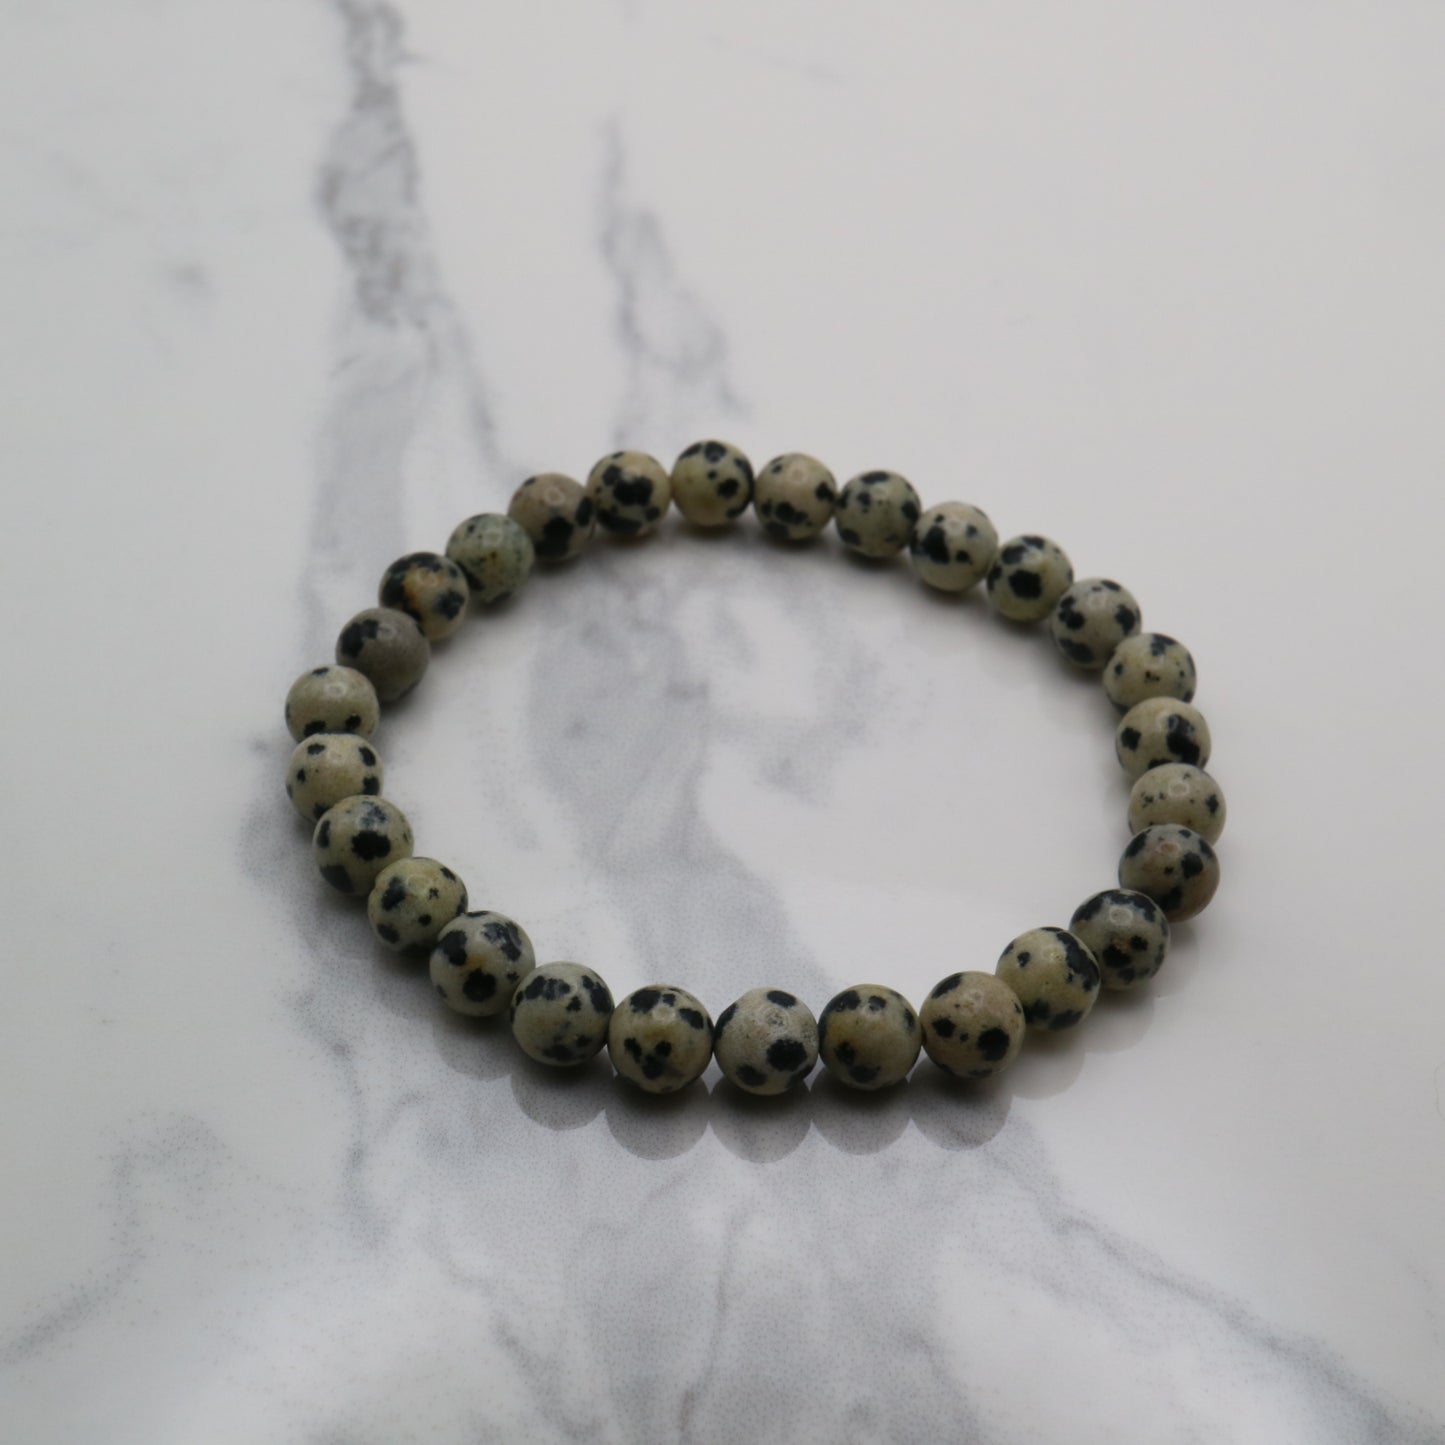 Dalmatian Jasper crystal bead bracelet with 6mm size beads